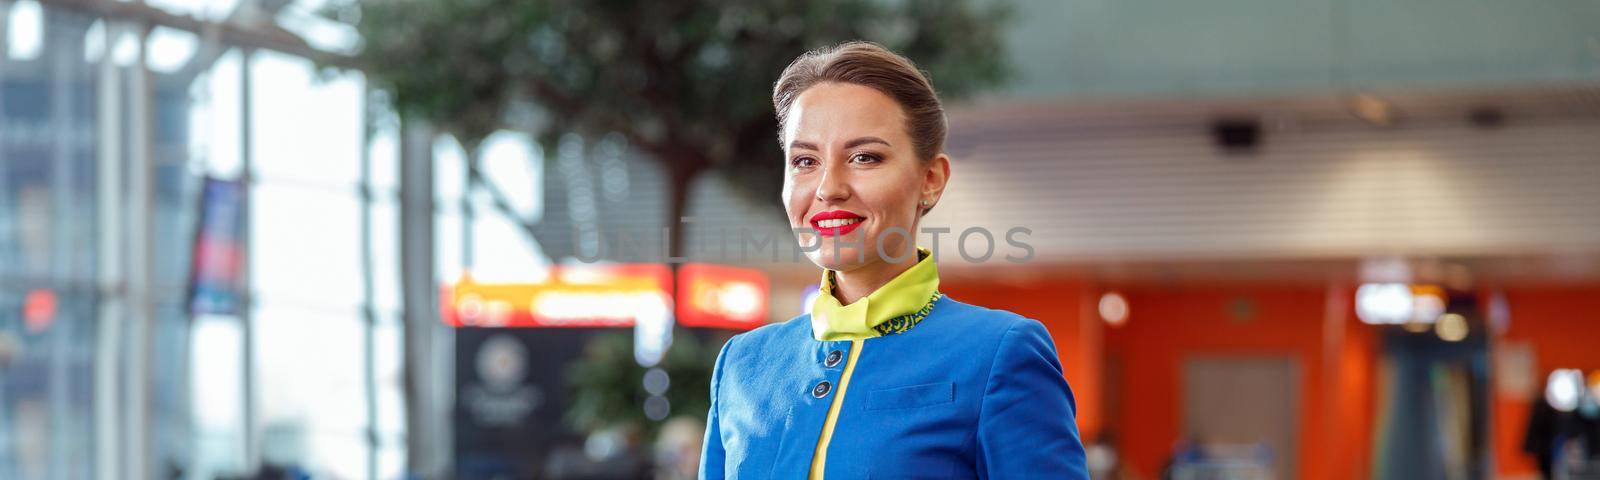 Joyful woman stewardess standing in airport terminal by Yaroslav_astakhov